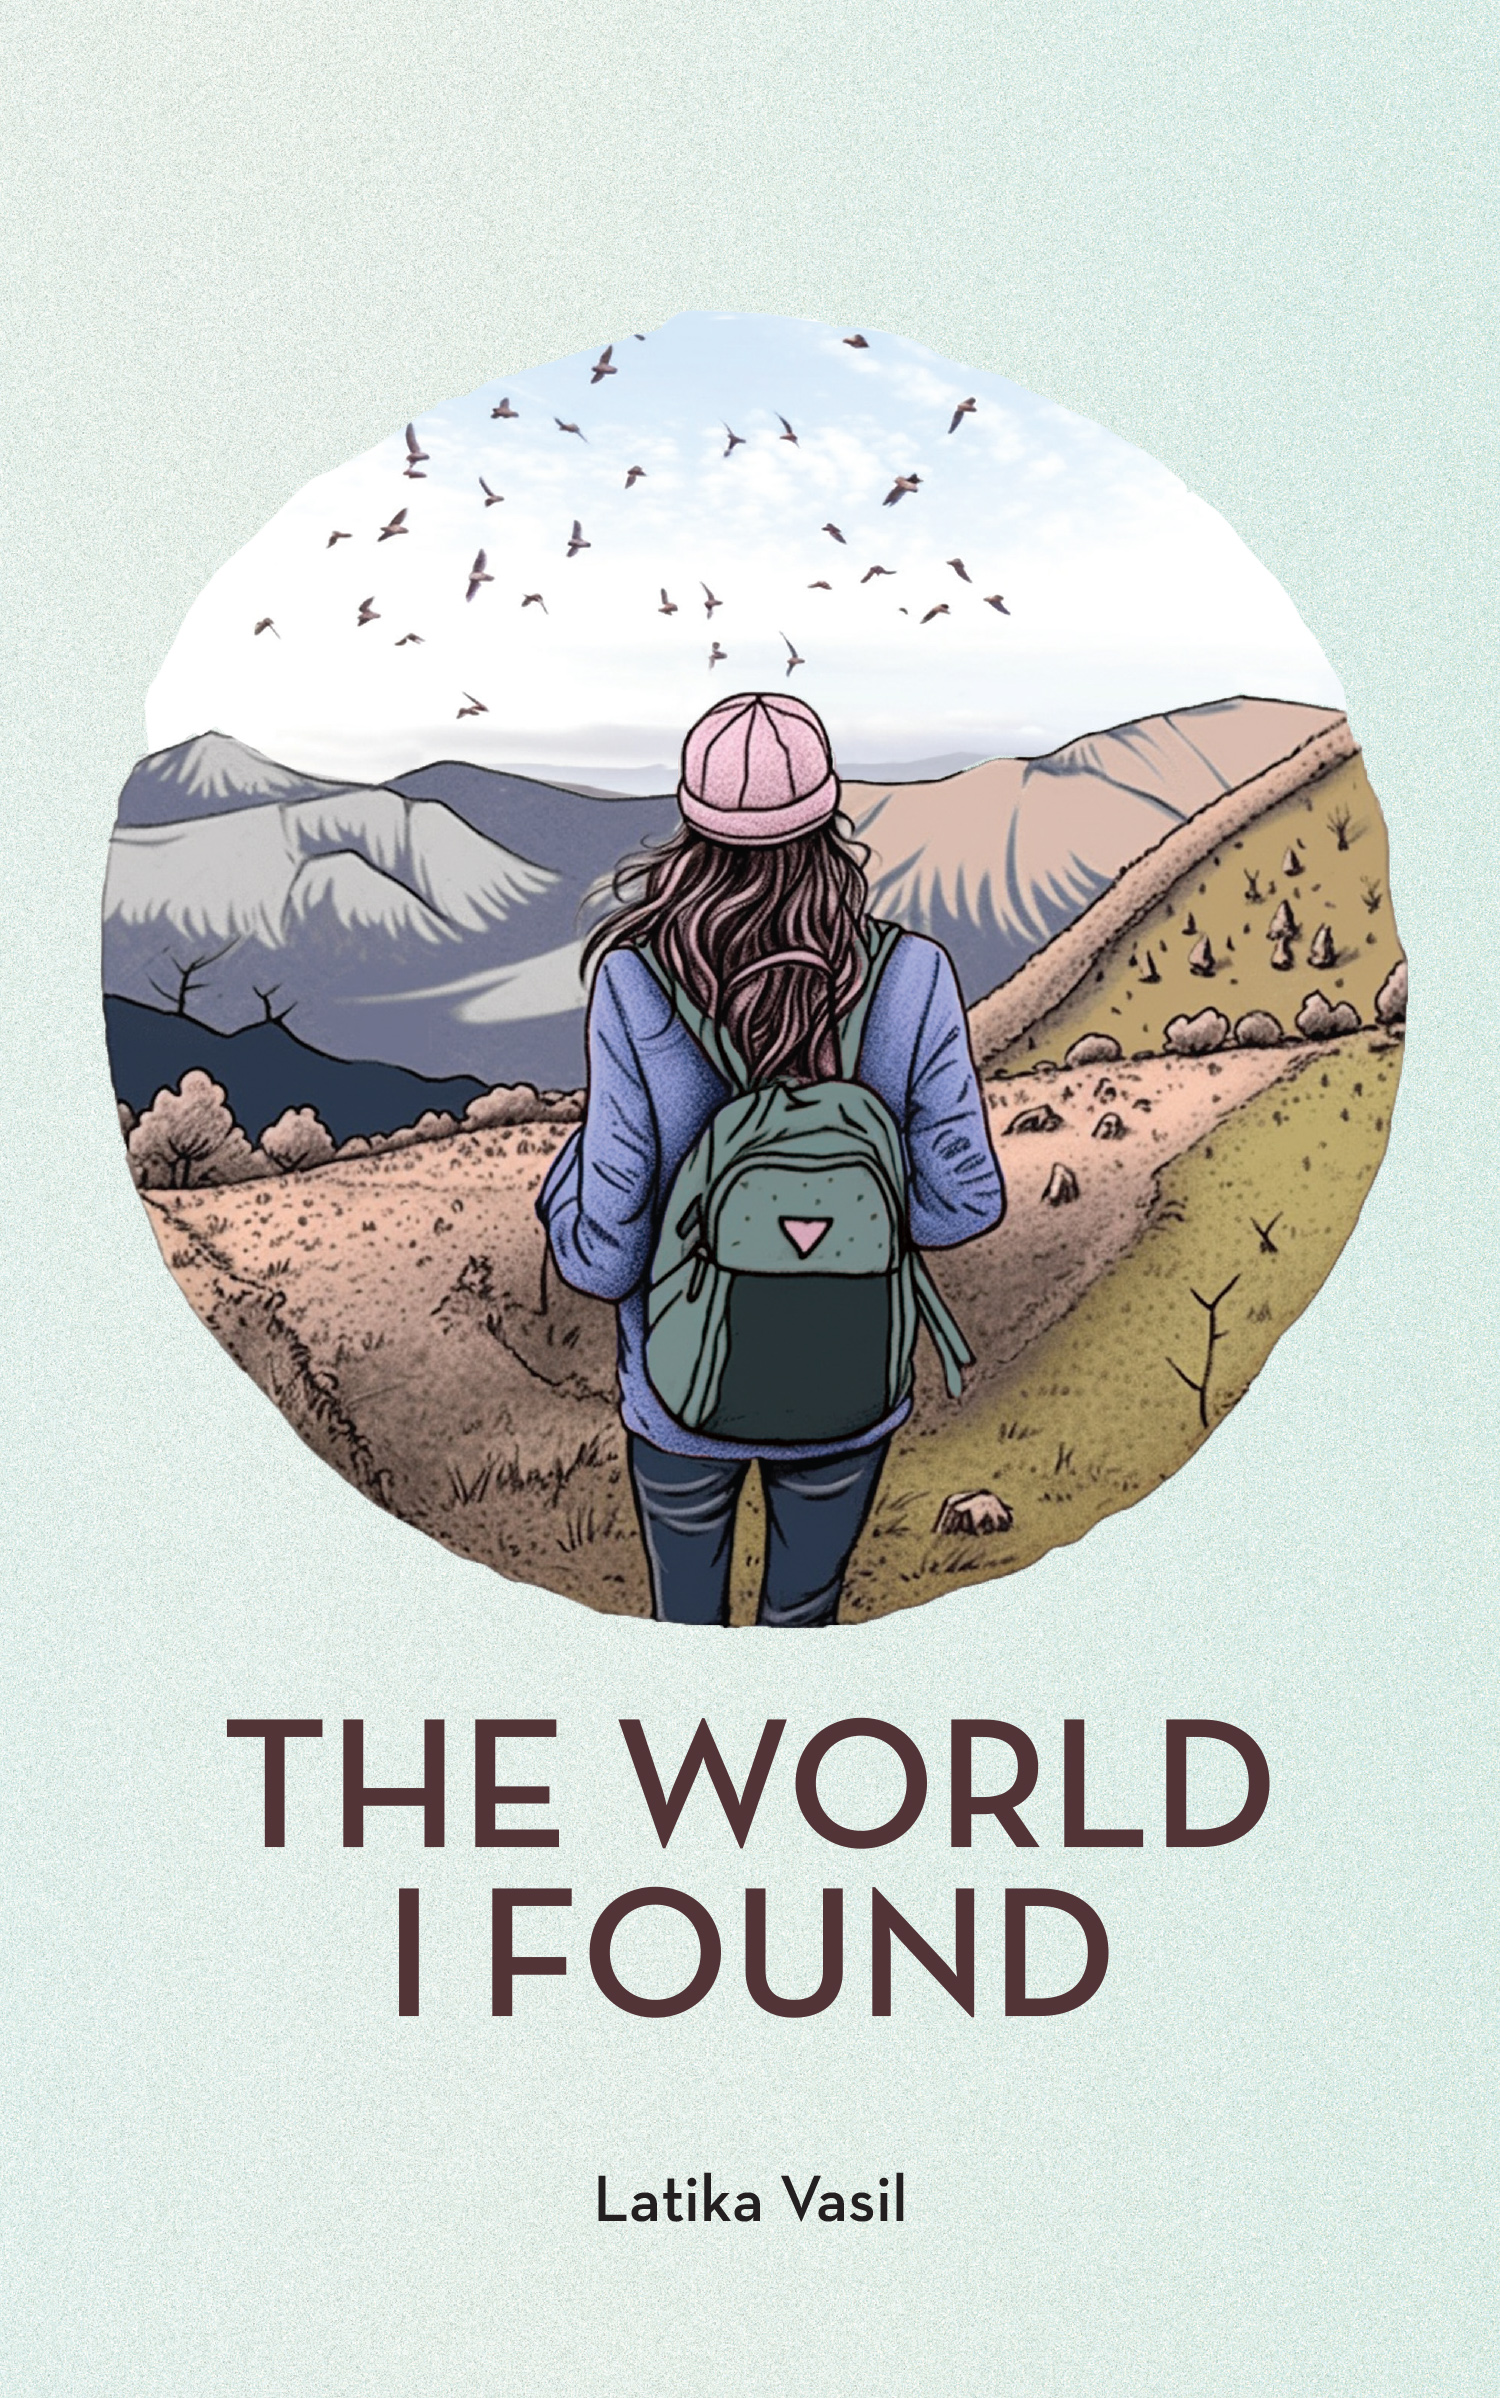 Cover image of novel "The World Found" by Latika Vasil